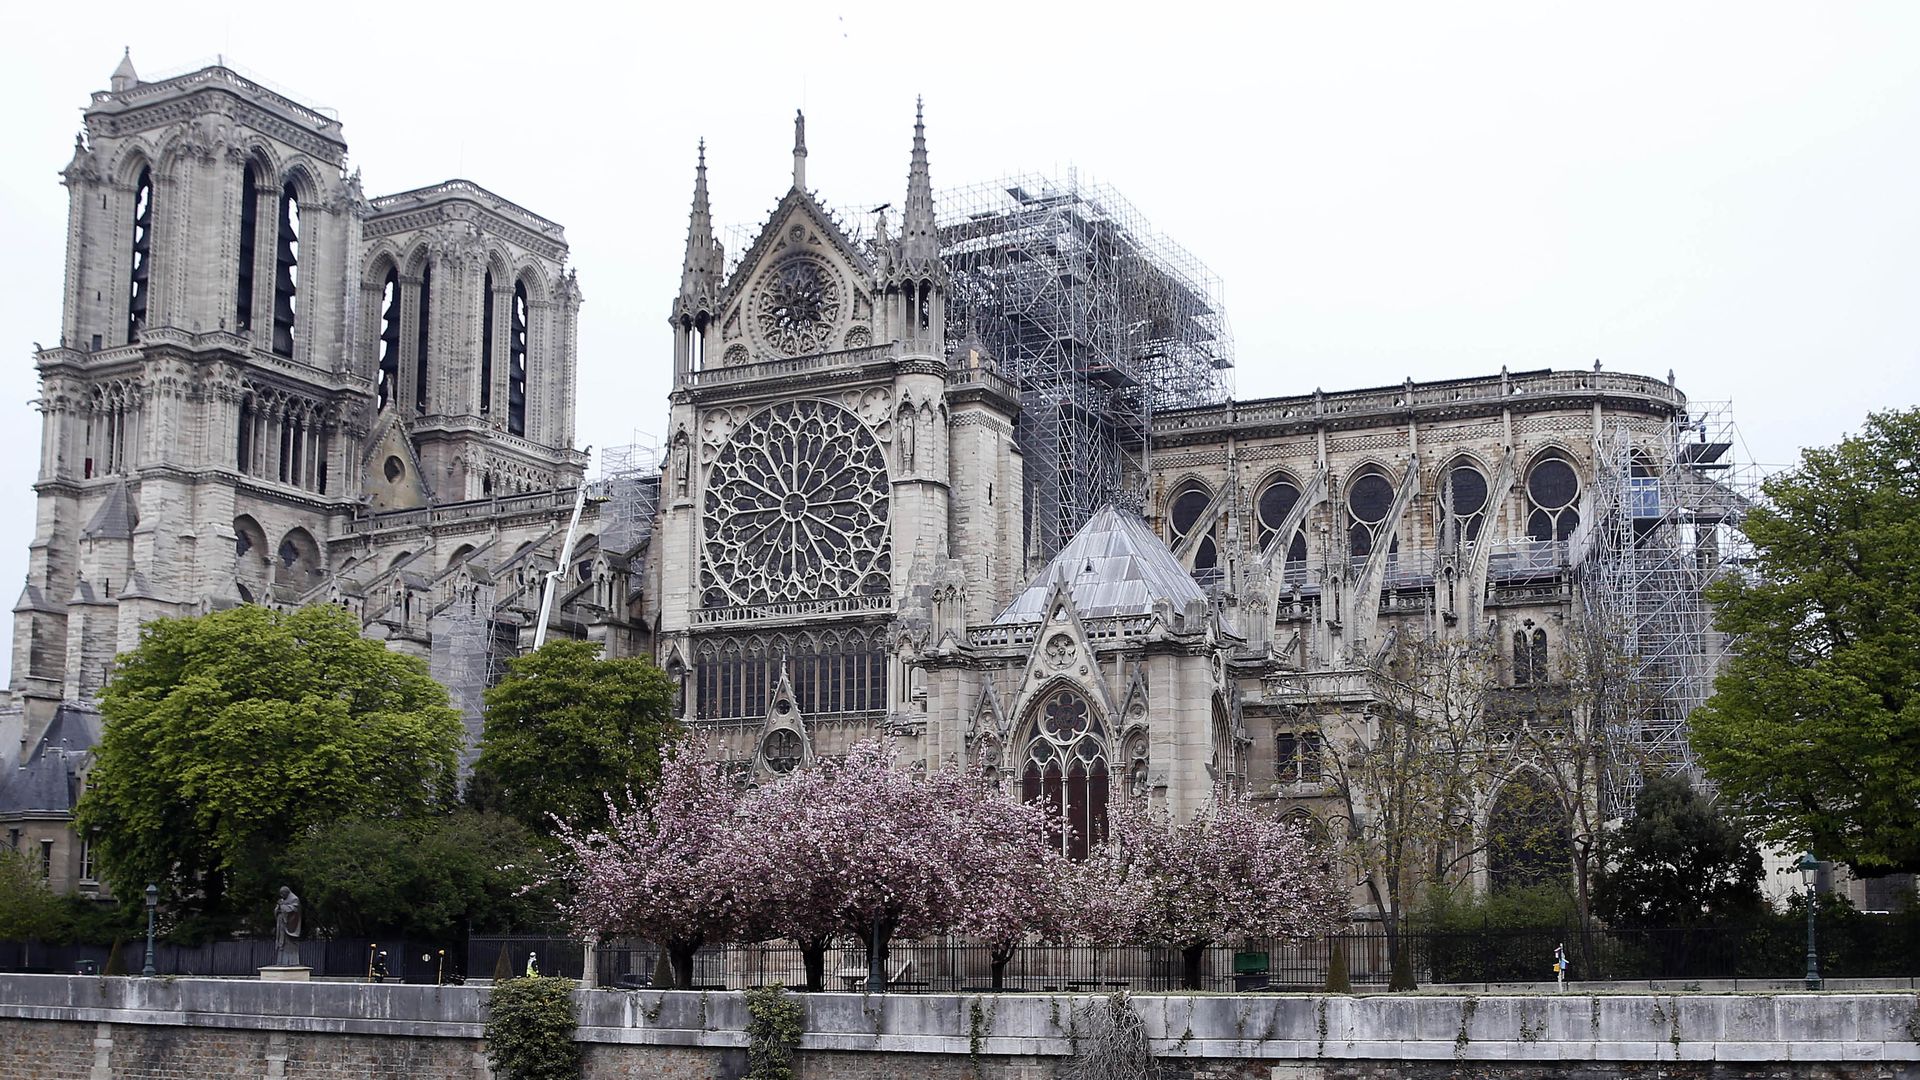 The Notre Dame damage